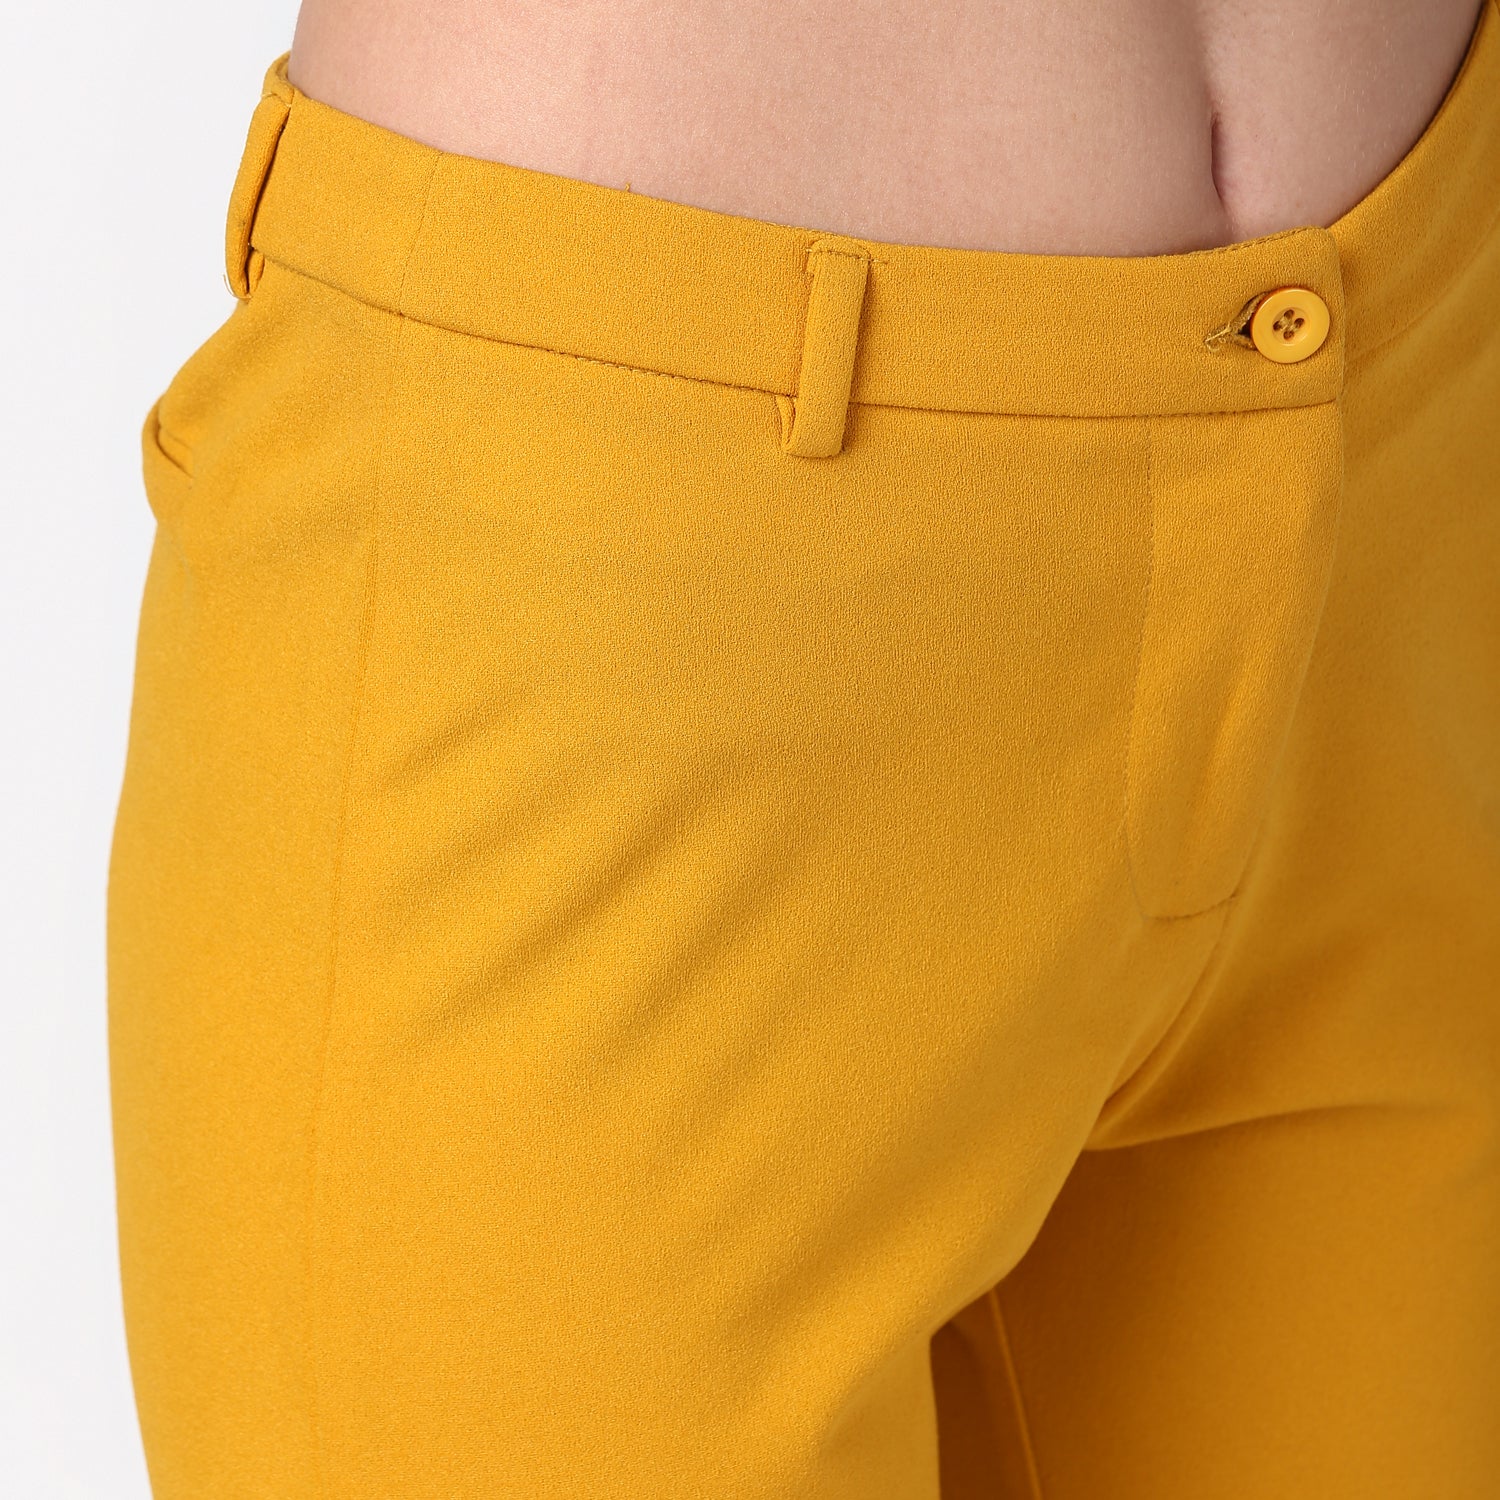 Women's Mustard Yellow Coordinated Peplum Top and Pants Set - StyleStone